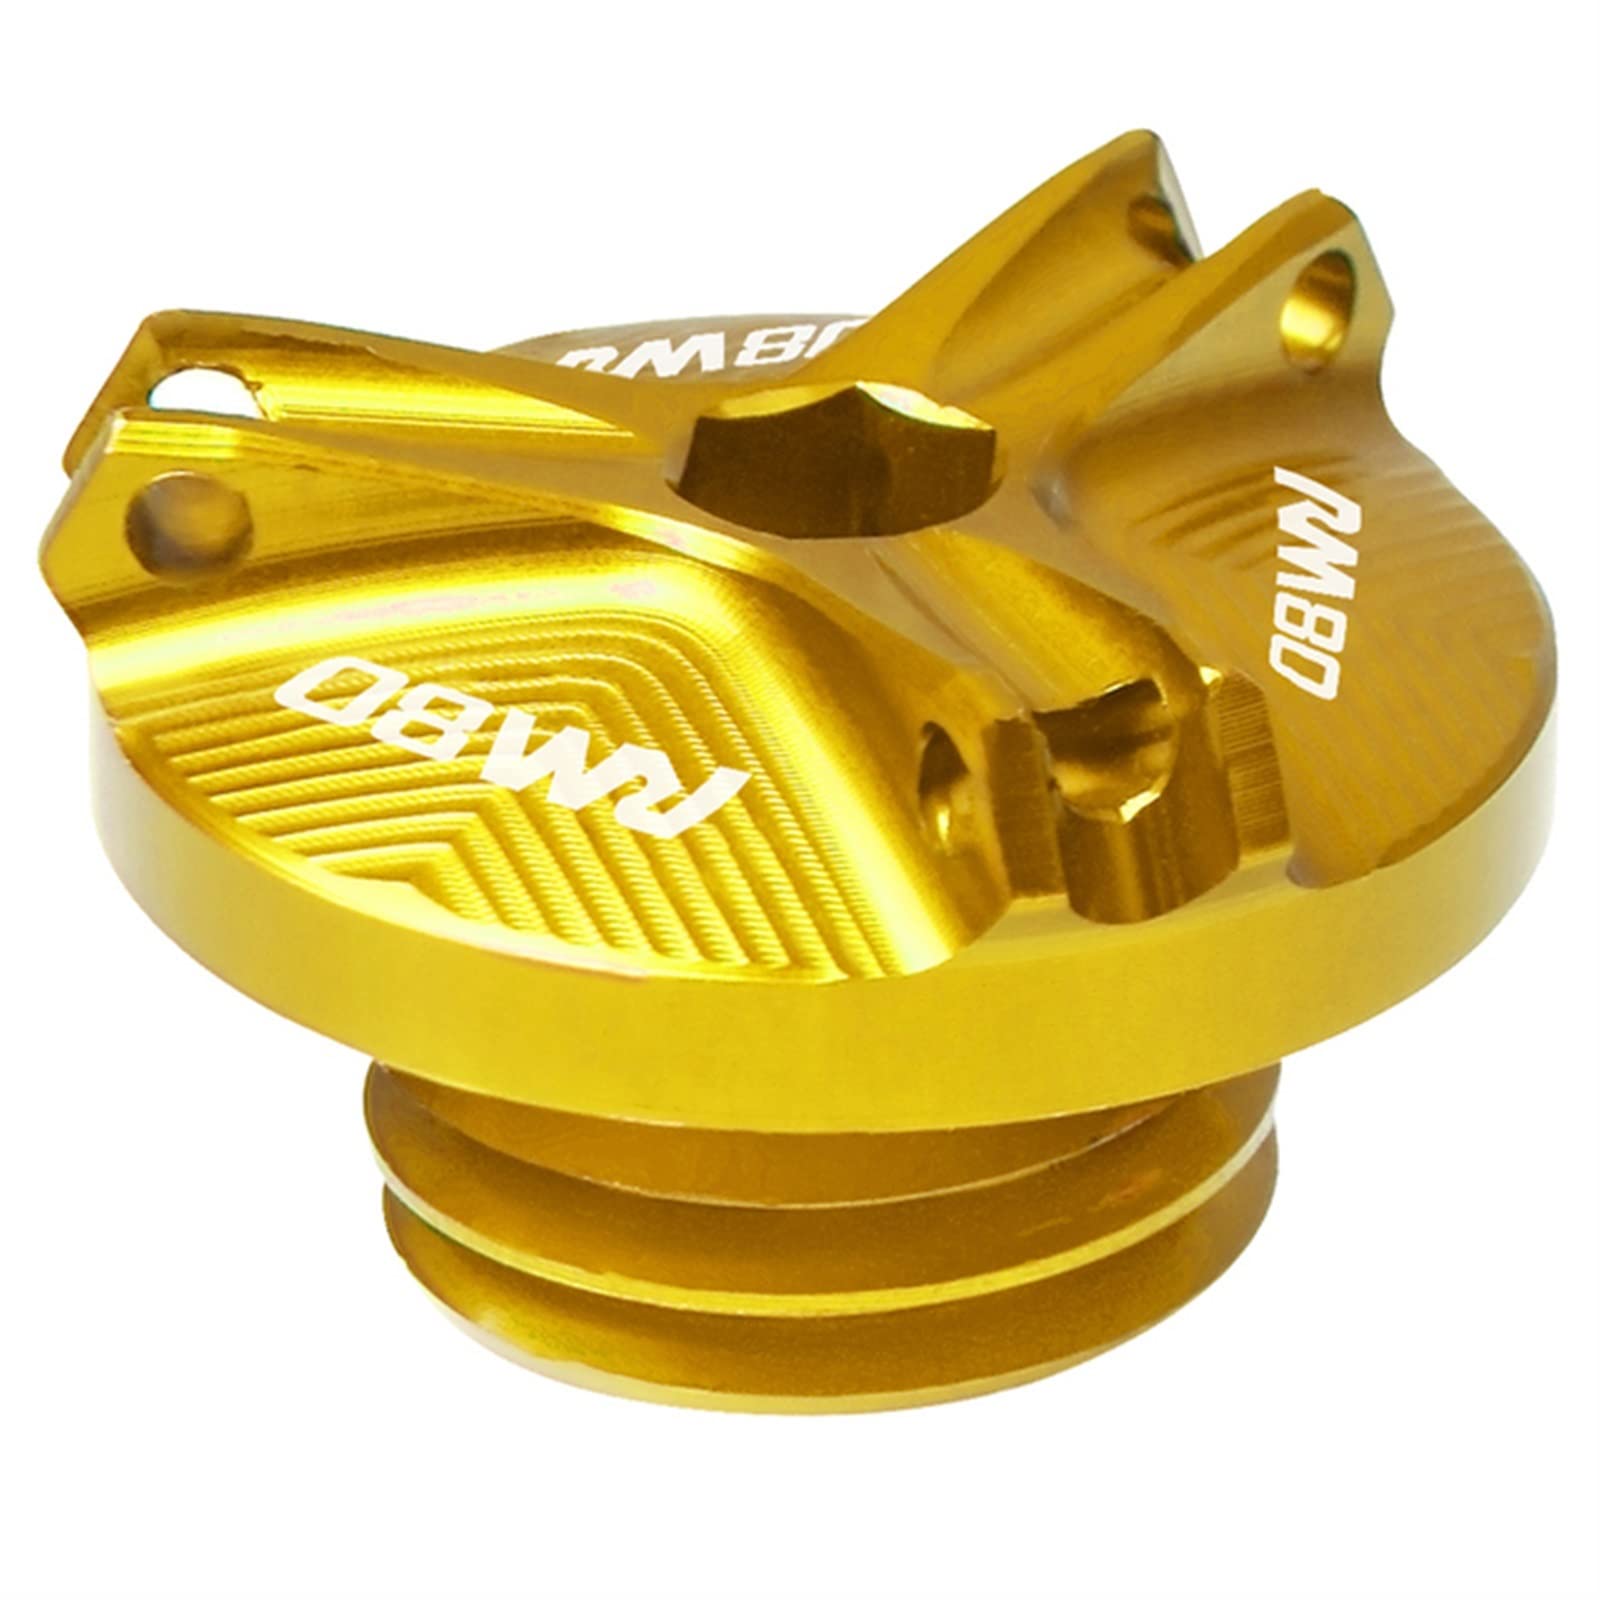 DOKLY Motorradzubehör Motorölbecher Öleinfülldeckel Für Suzuki RM 85L RM125 RM250 RM80 RM85 RM85L RMX250 RMX250S (Farbe : Gold) von DOKLY